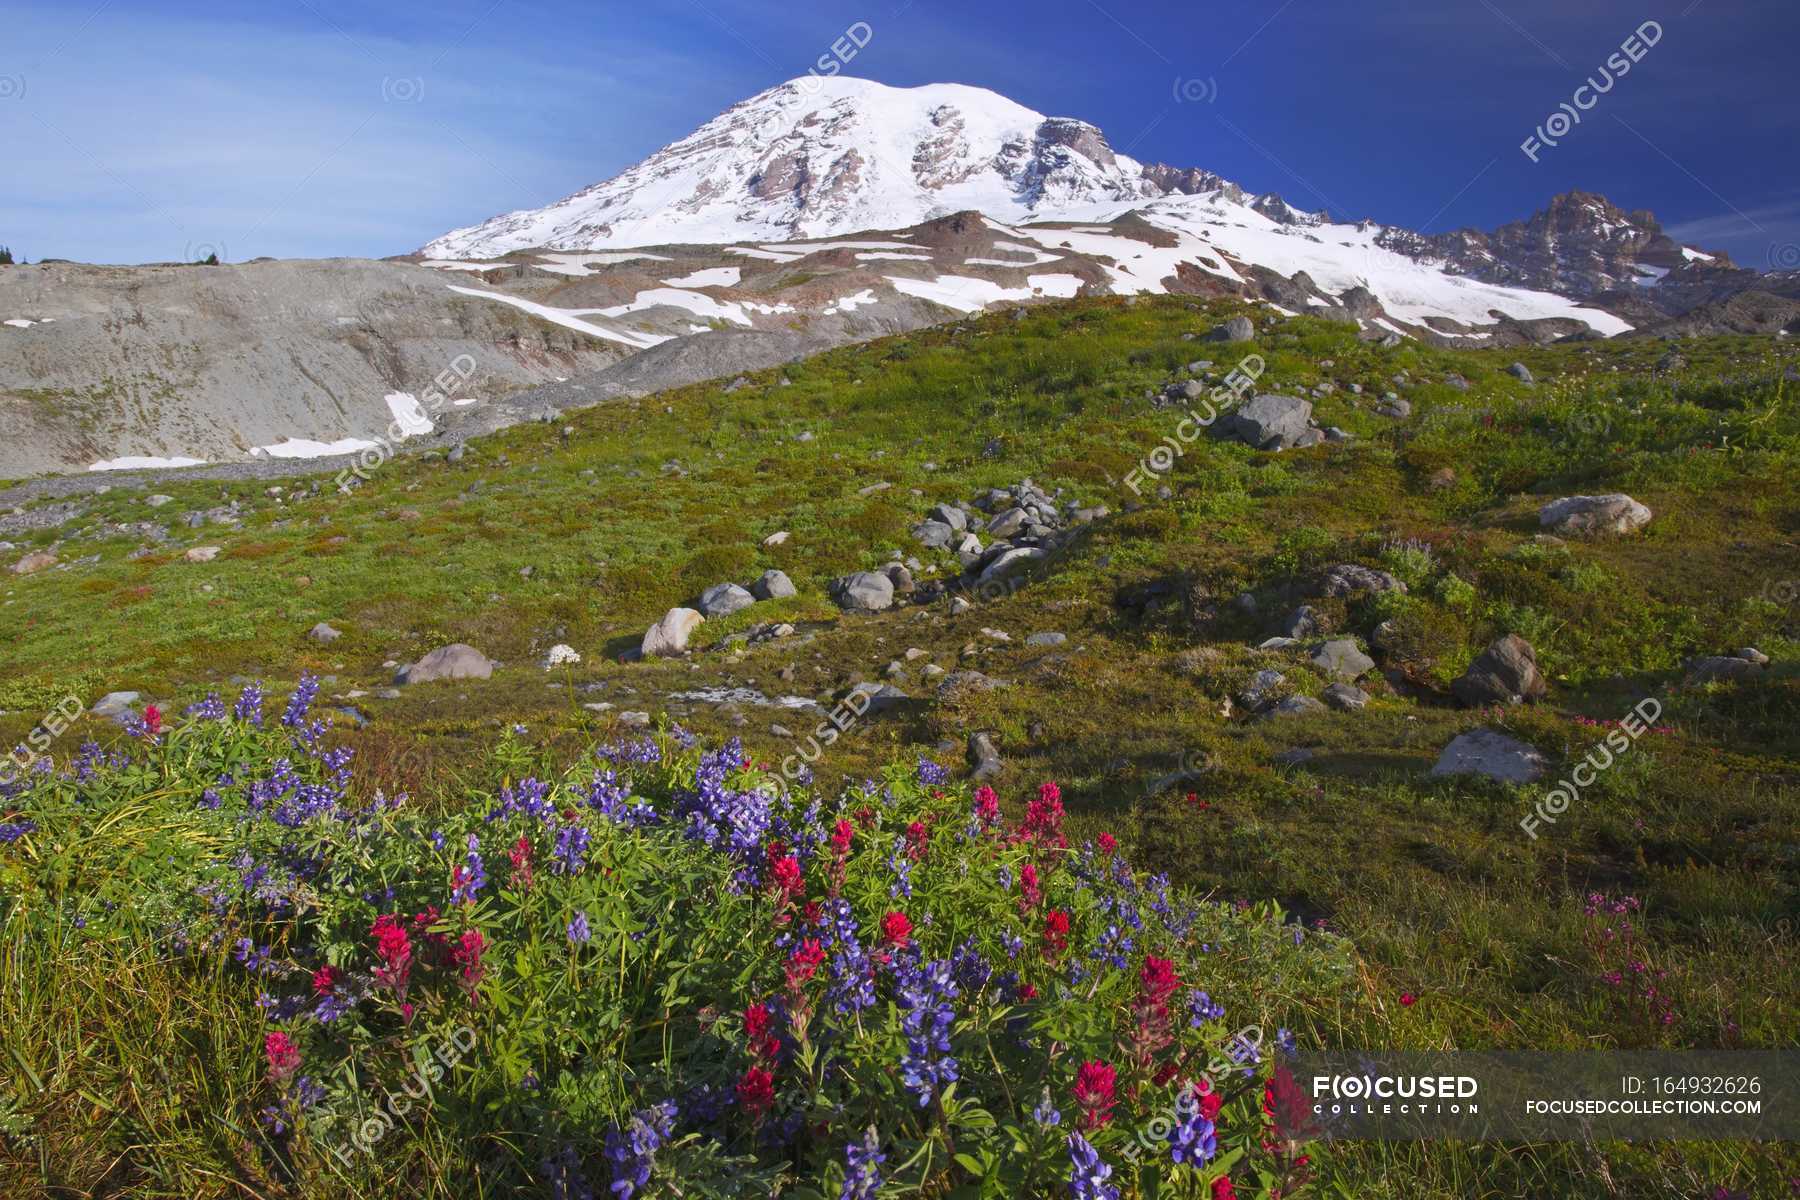 wildflowers-at-foot-of-mountain-idyllic-outdoors-stock-photo-164932626